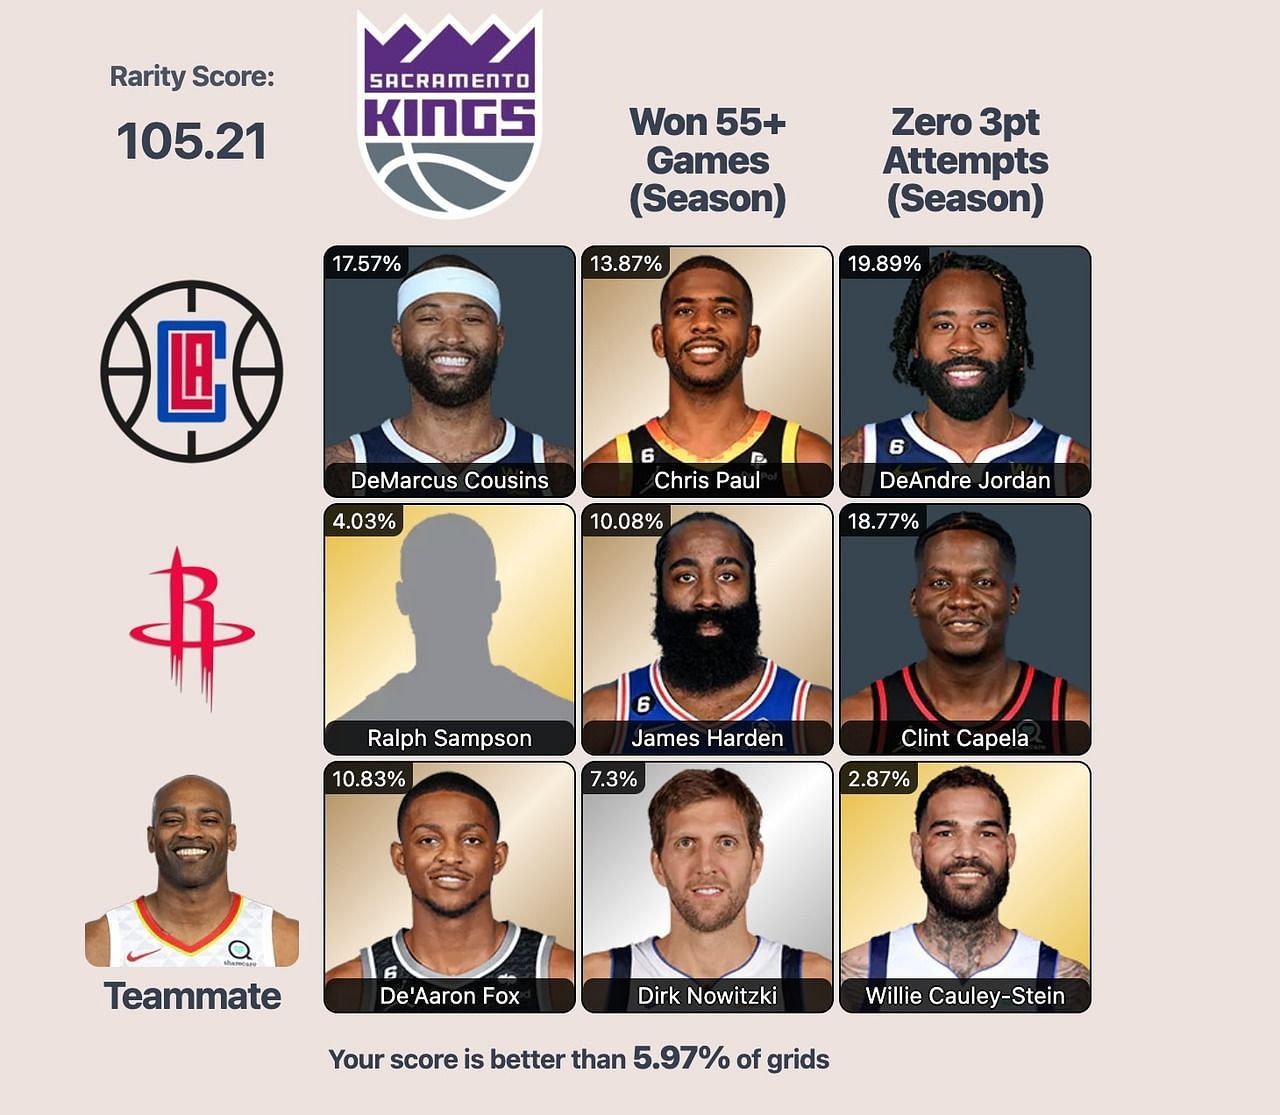 NBA roundup: Vince Carter, Sacramento Kings thump Cleveland